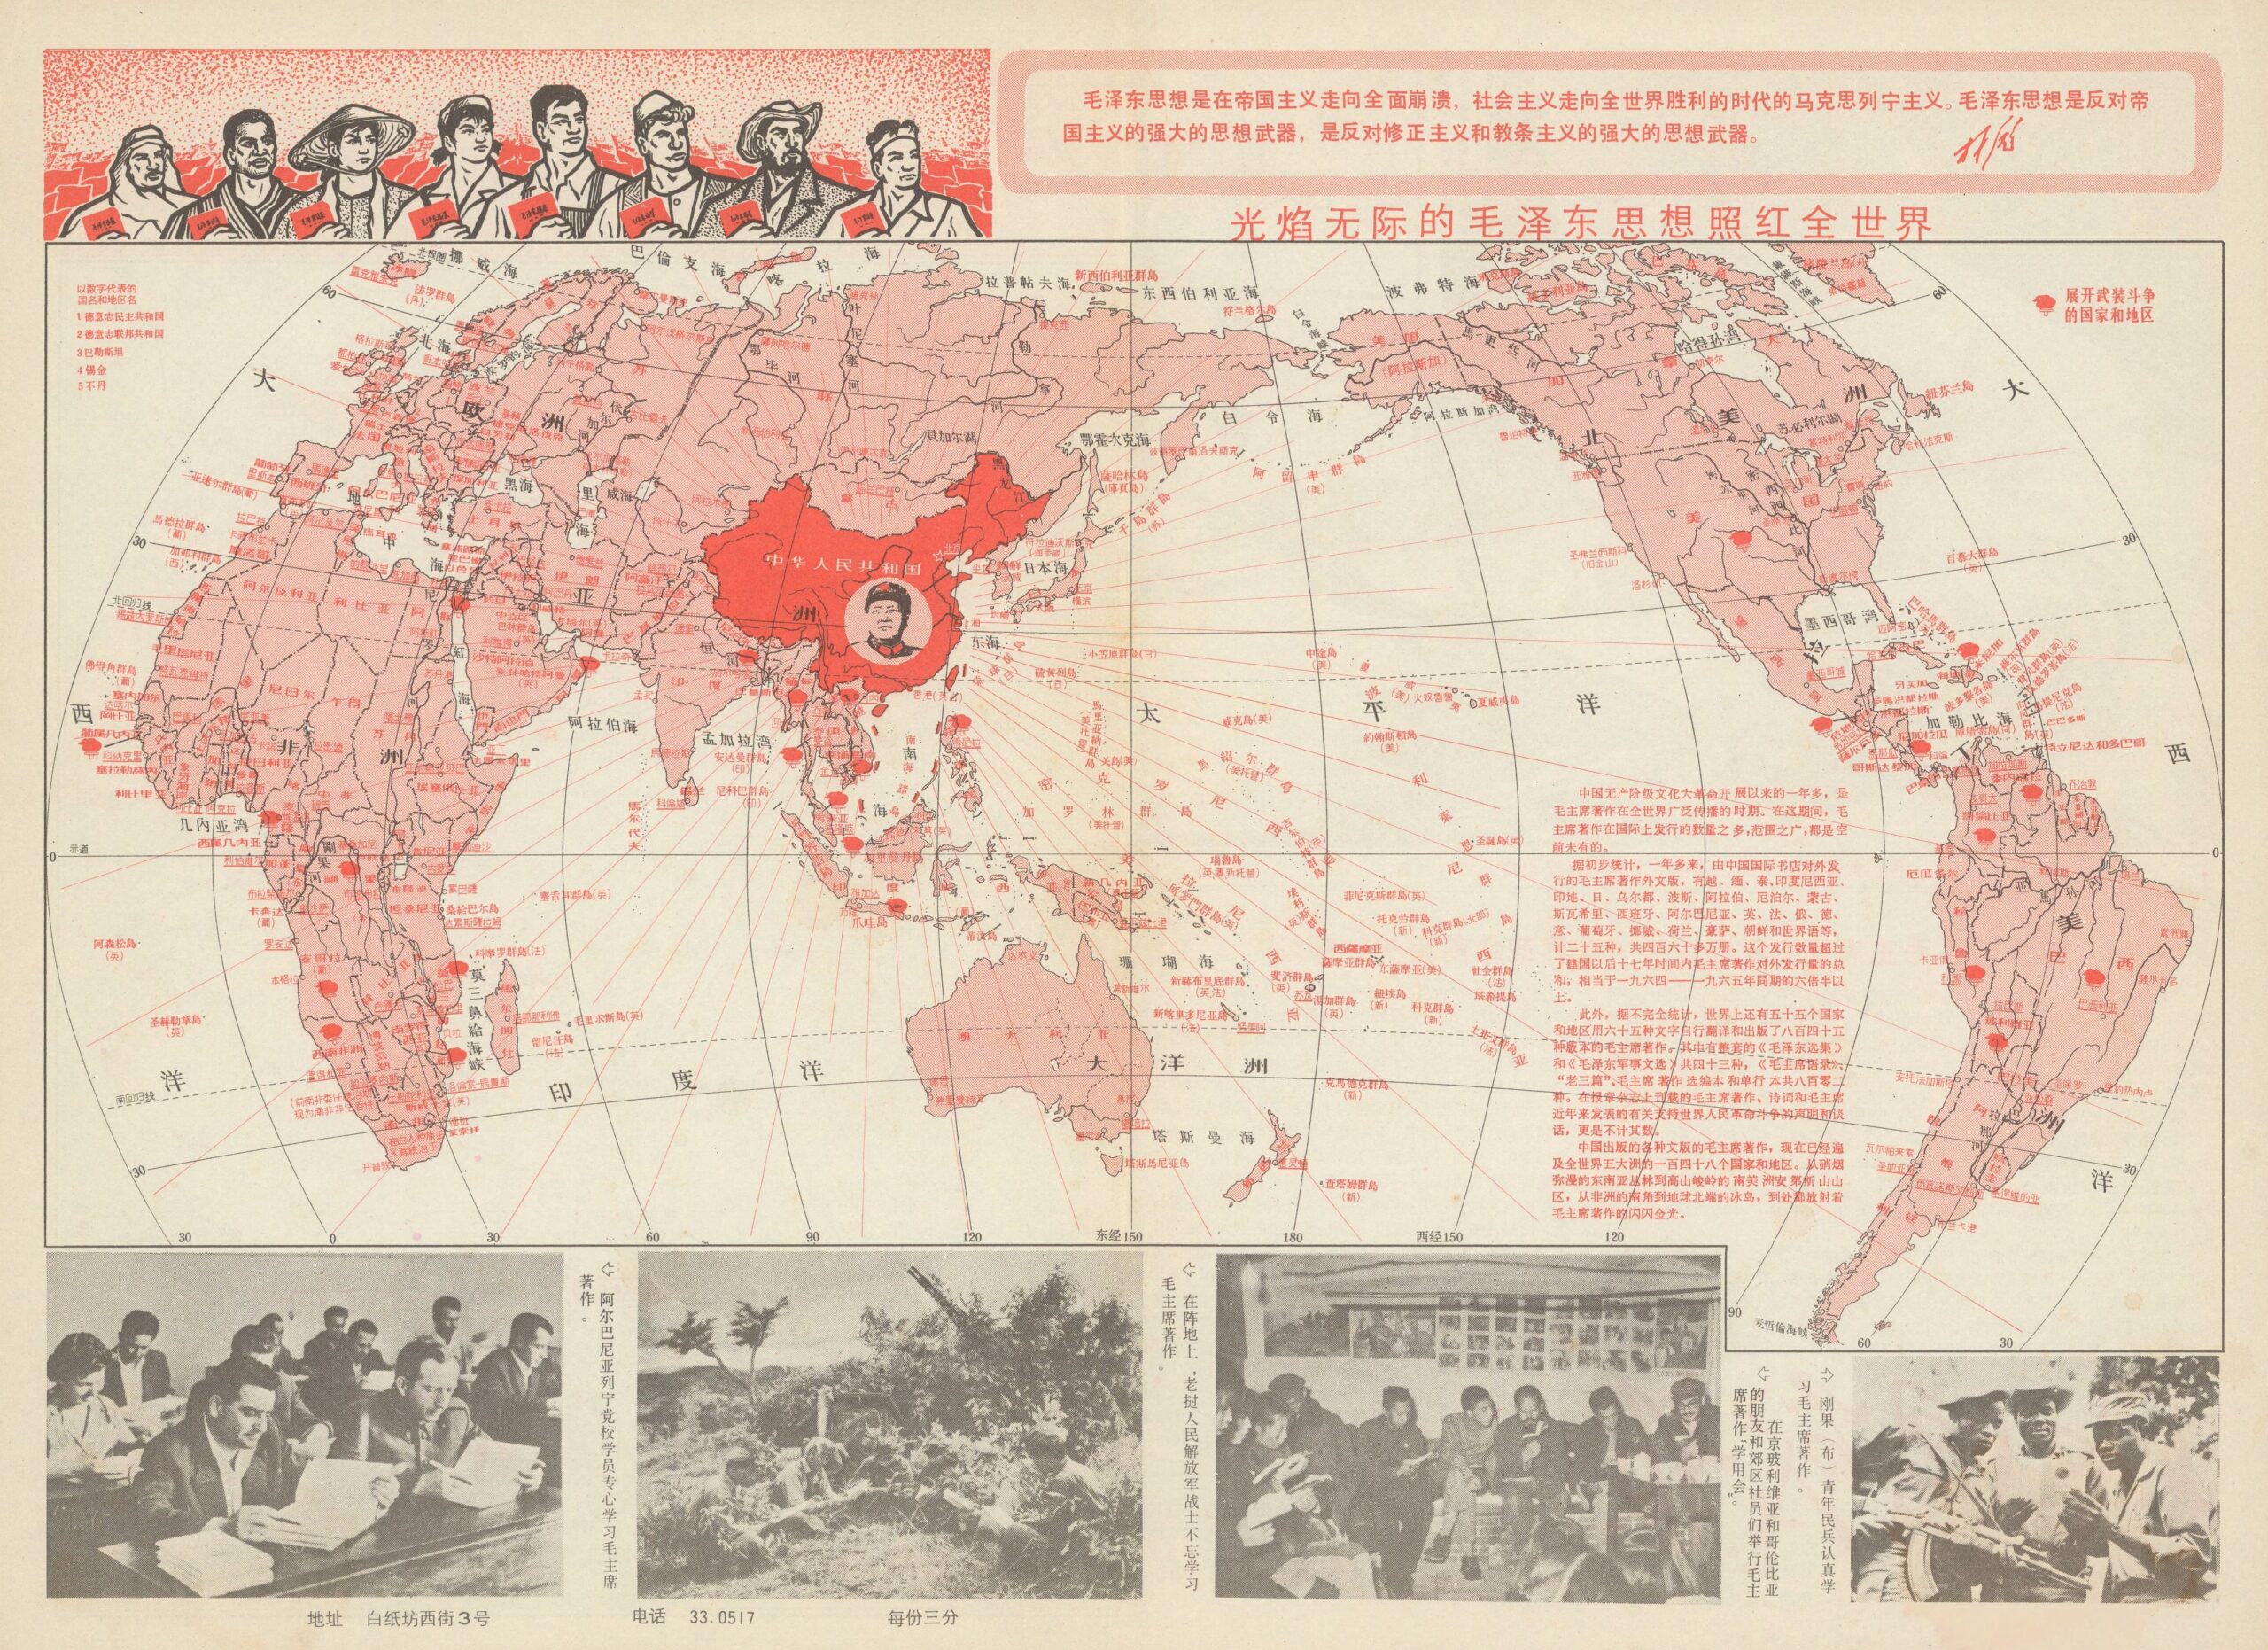 China, centro de la revolución mundial (1967)